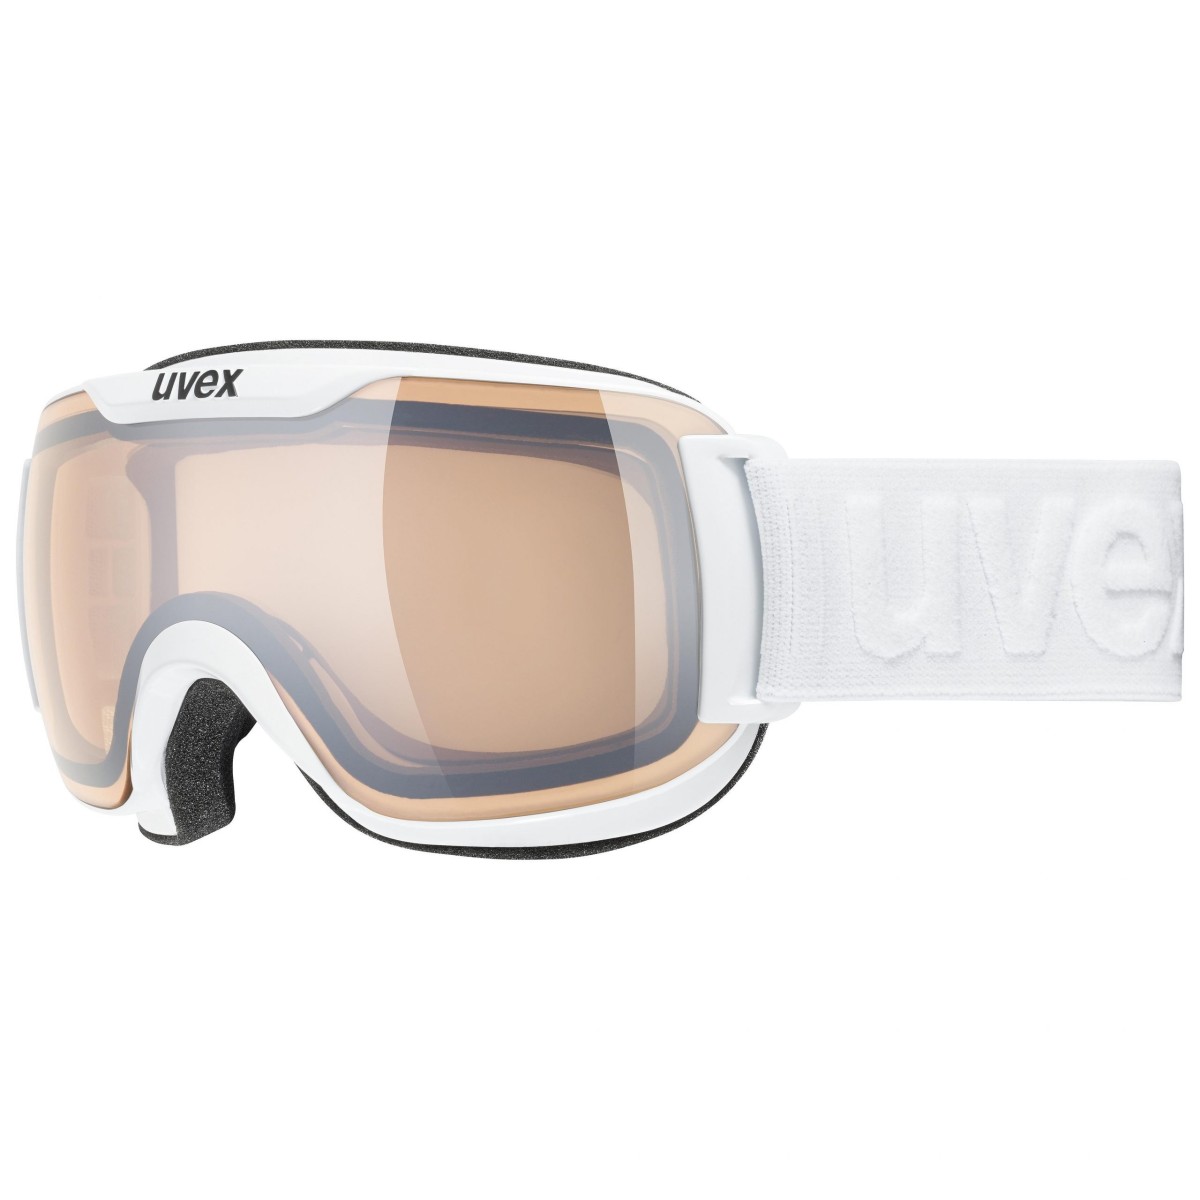 UVEX slēpošanas brilles DOWNHILL 2000 S V baltas